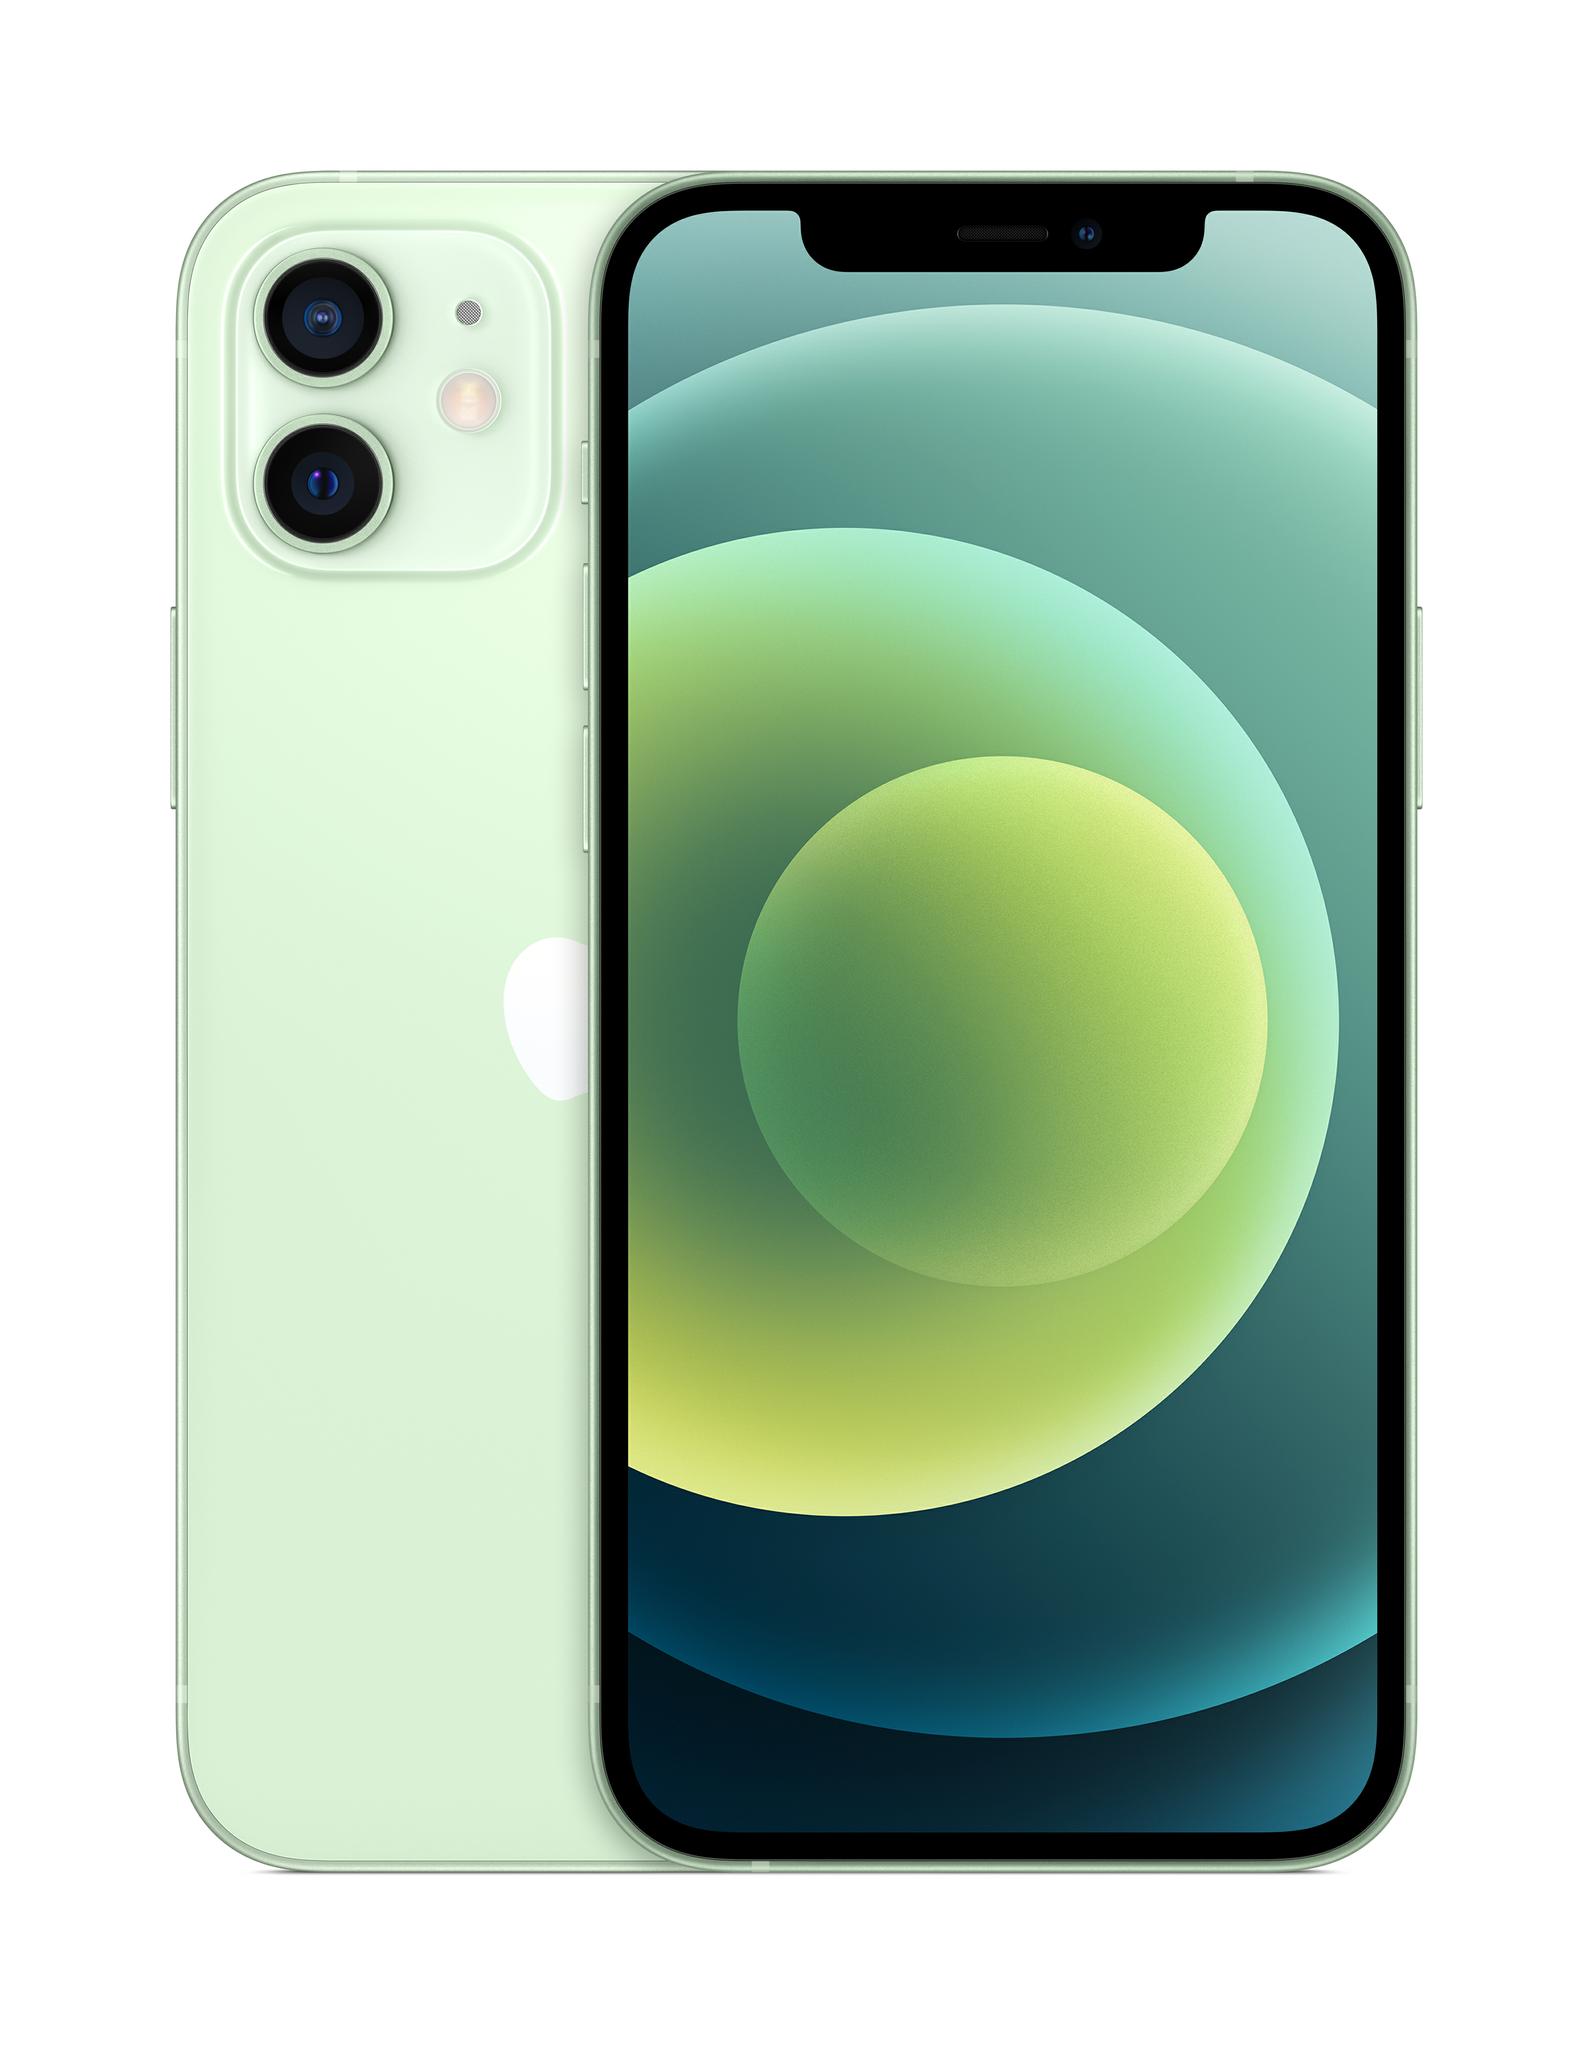 Apple iPhone 12 Green, 6.1 